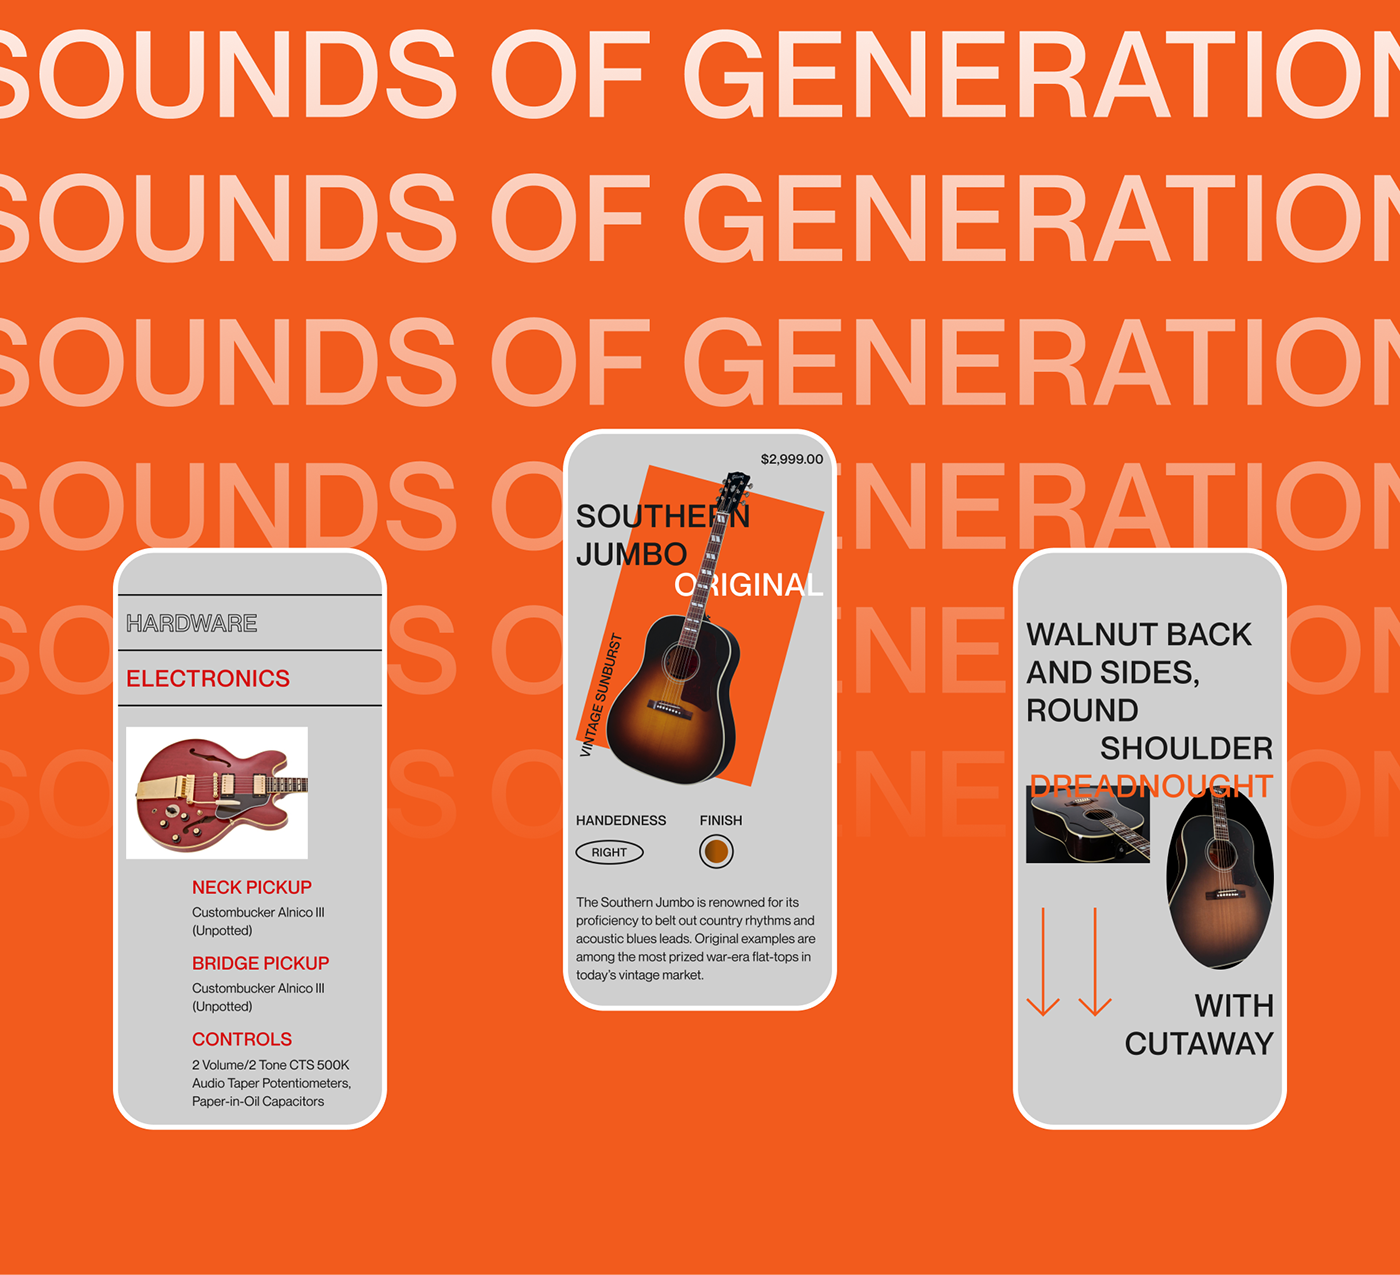 black Ecommerce Gibson guitar music typography   Webdesign